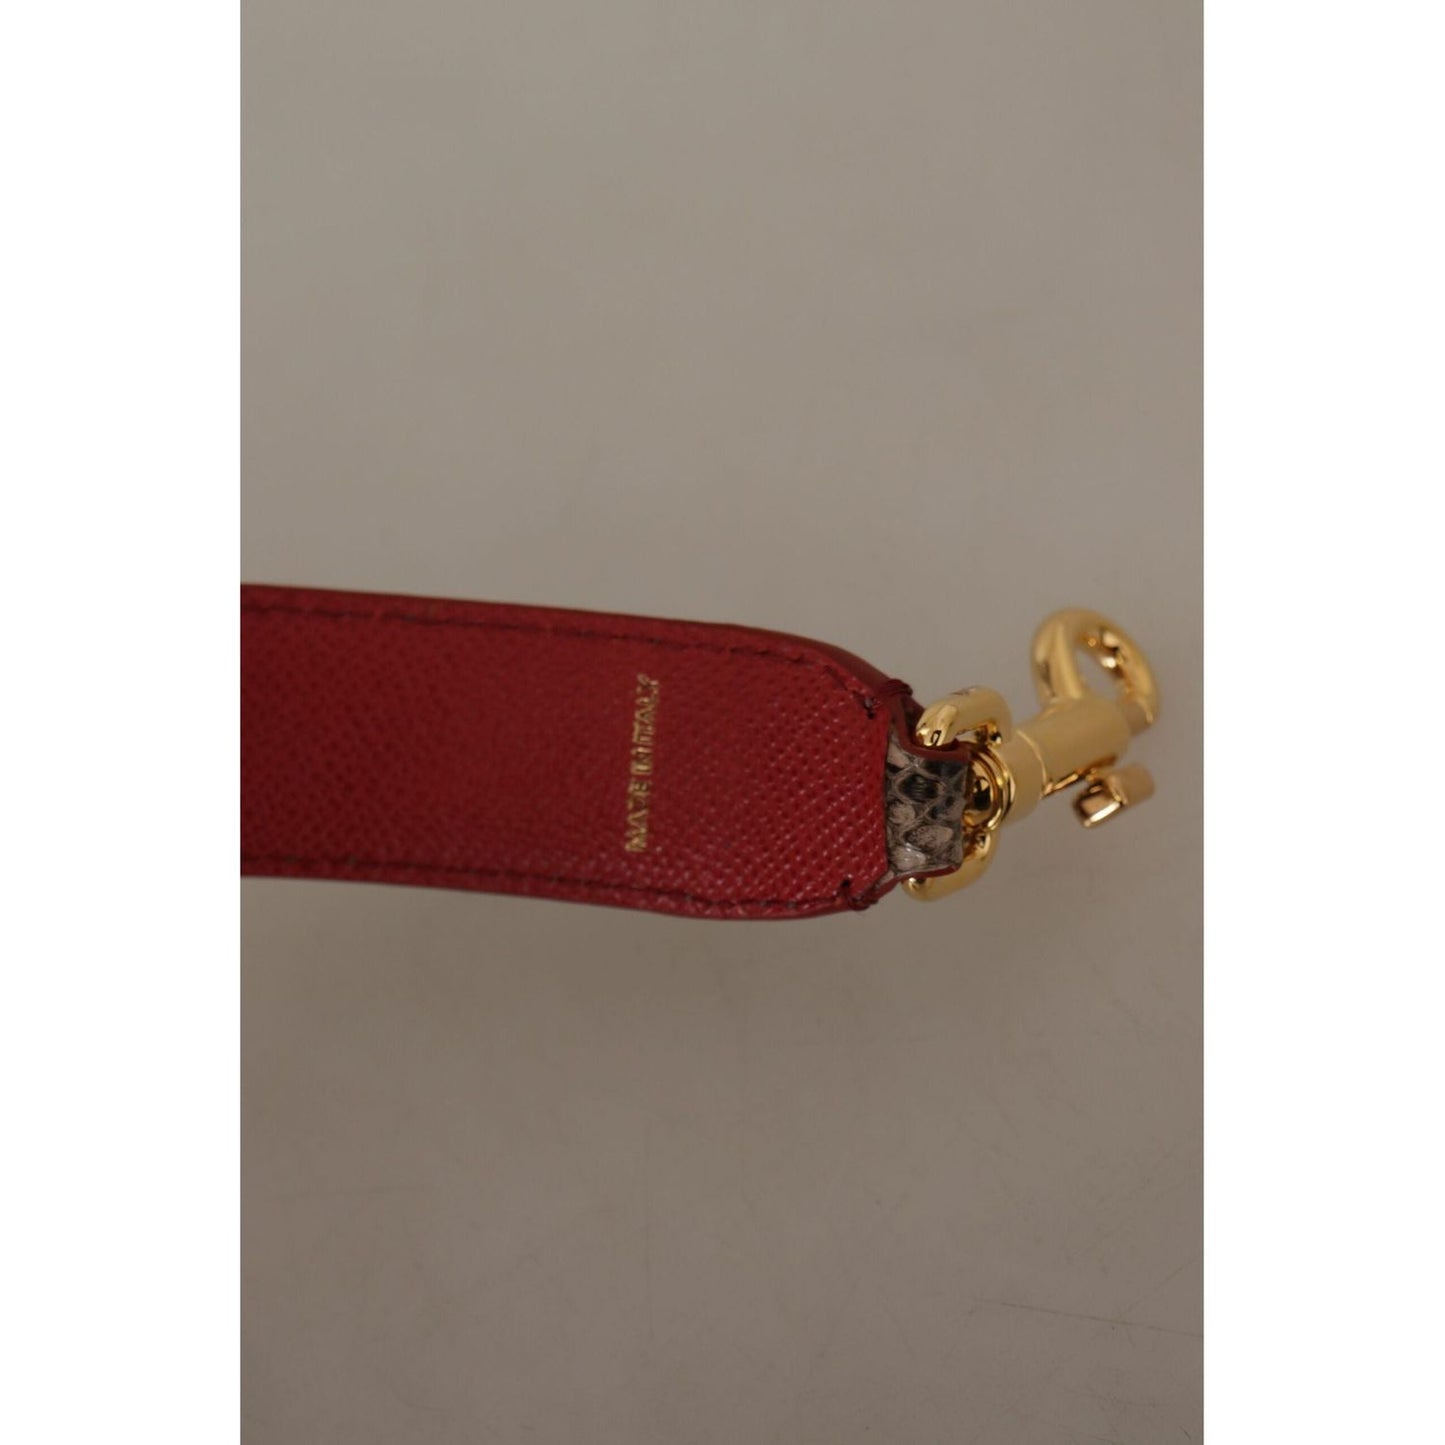 Dolce & Gabbana Elegant Python Leather Shoulder Strap brown-python-leather-studded-shoulder-strap IMG_9870-1-scaled-6e98e891-4f9.jpg